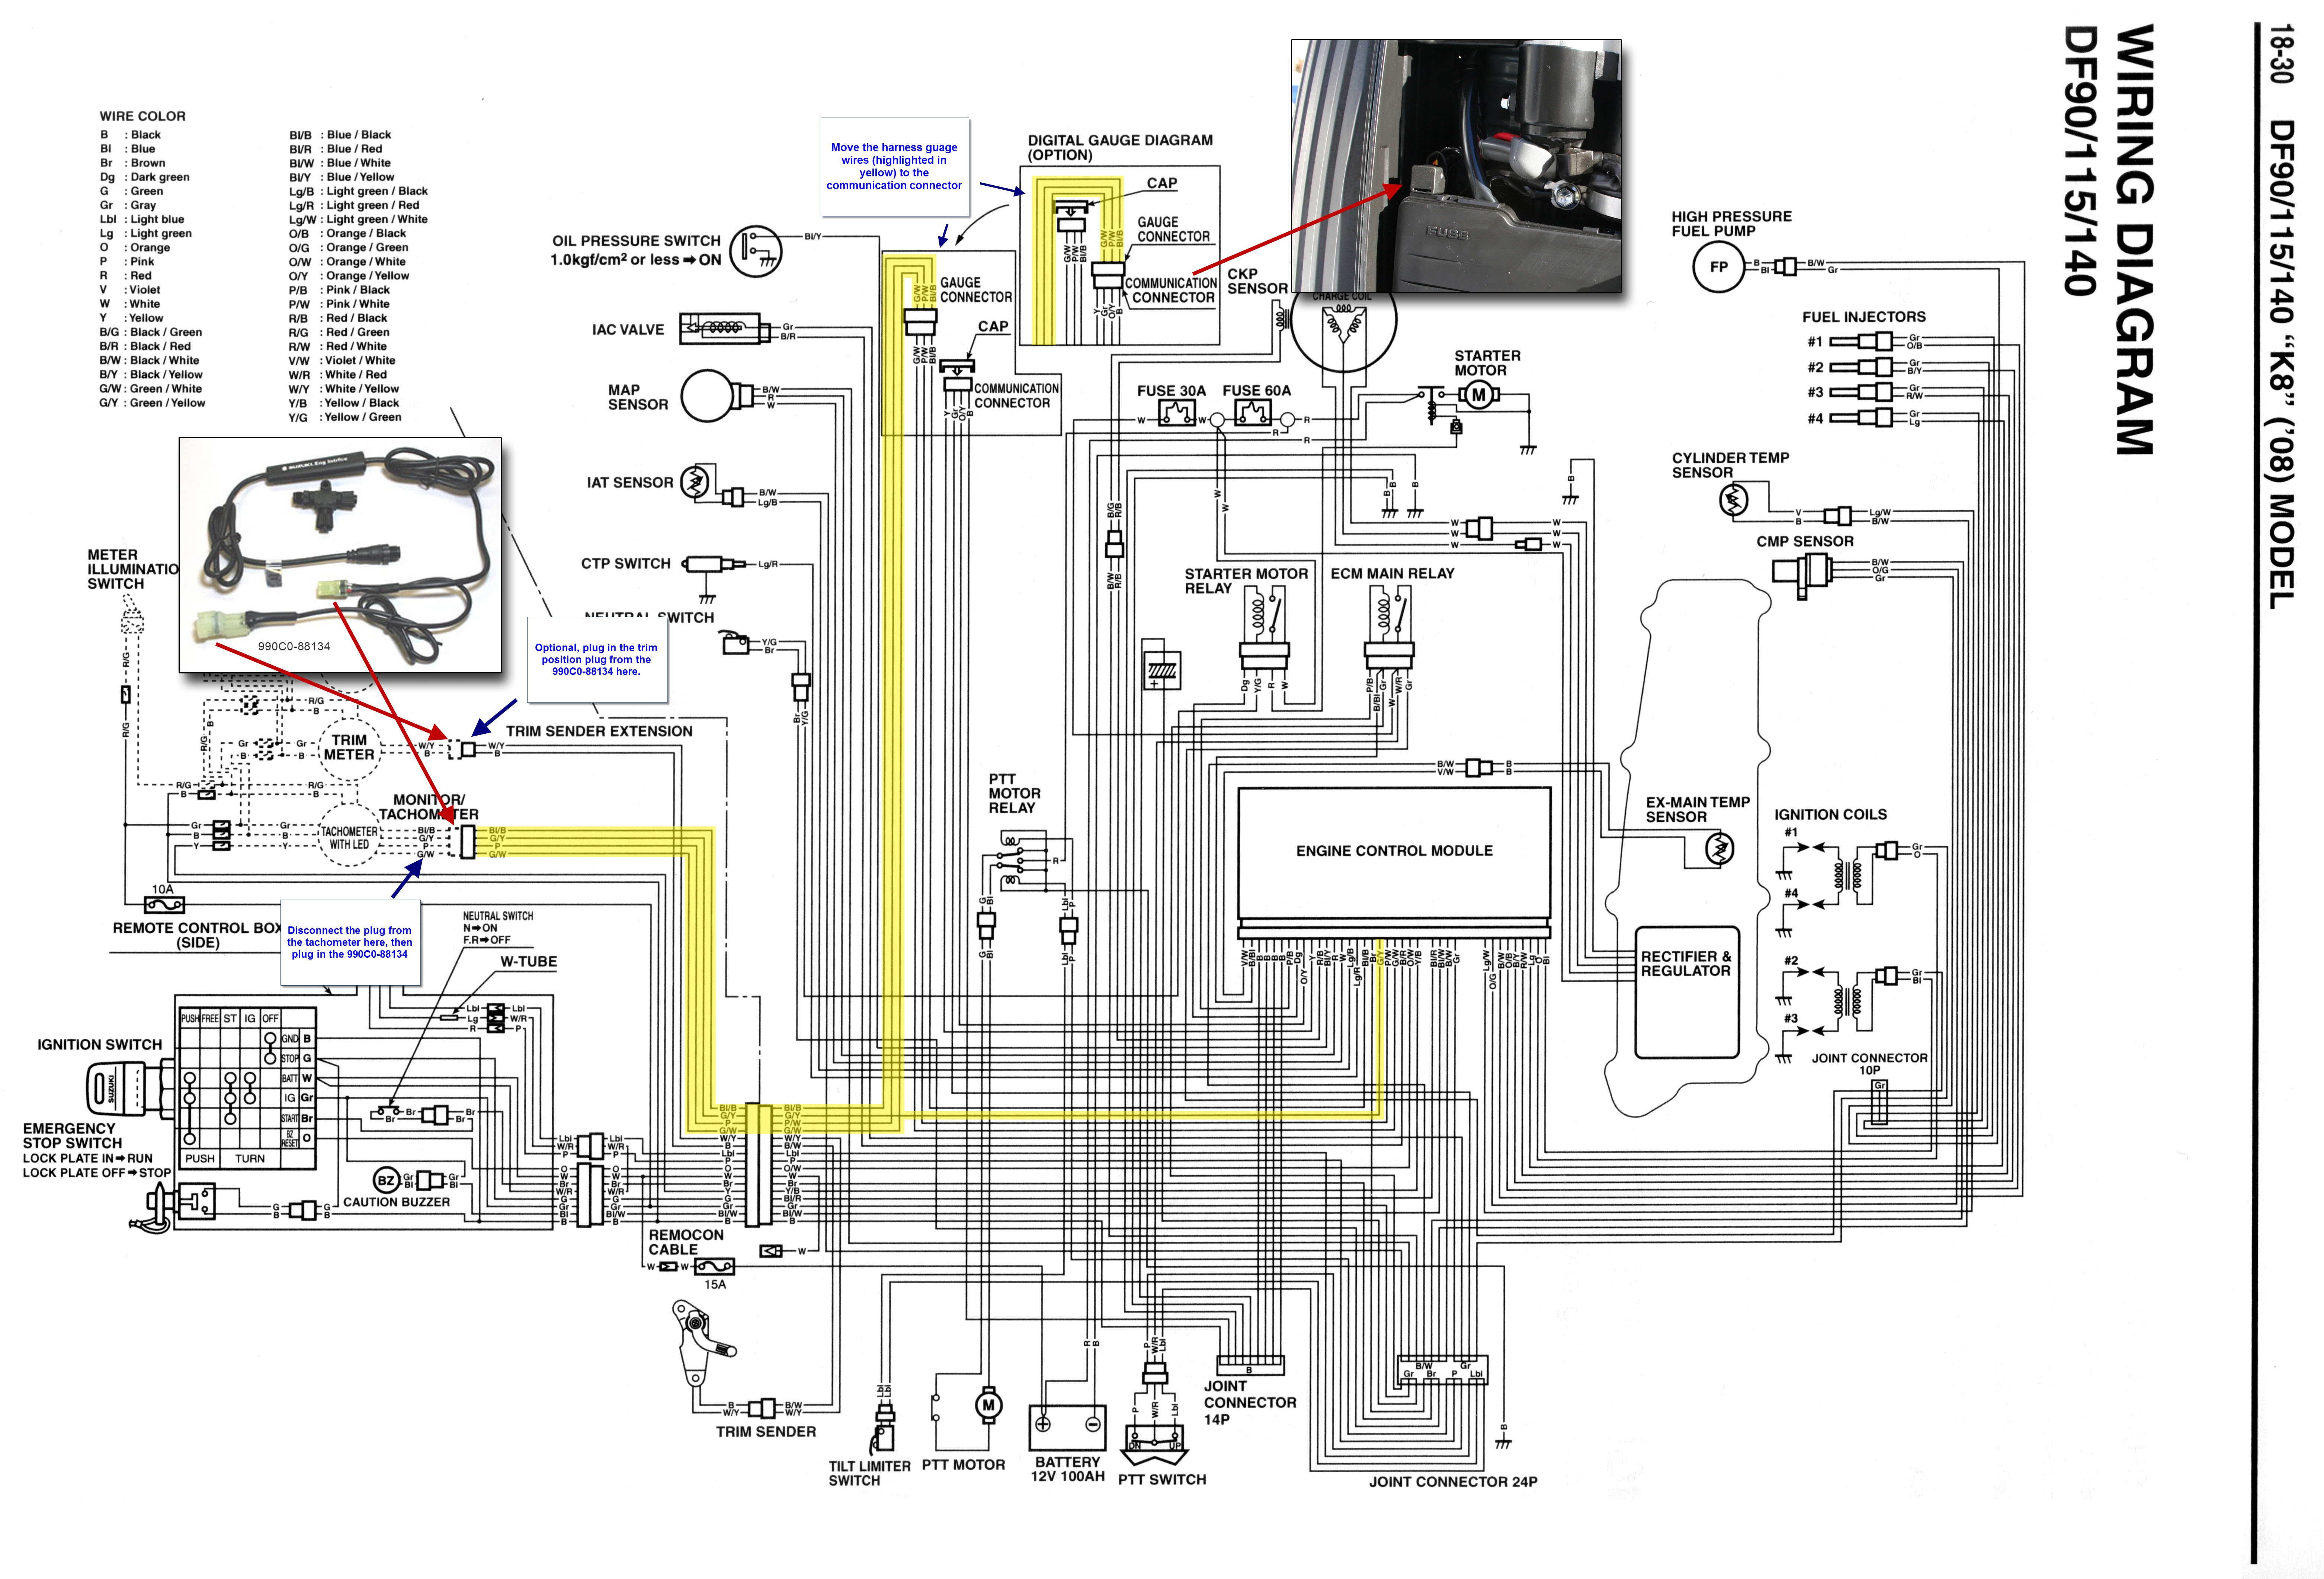 [DIAGRAM in Pictures Database] 2005 Suzuki Outboard Wiring Diagram